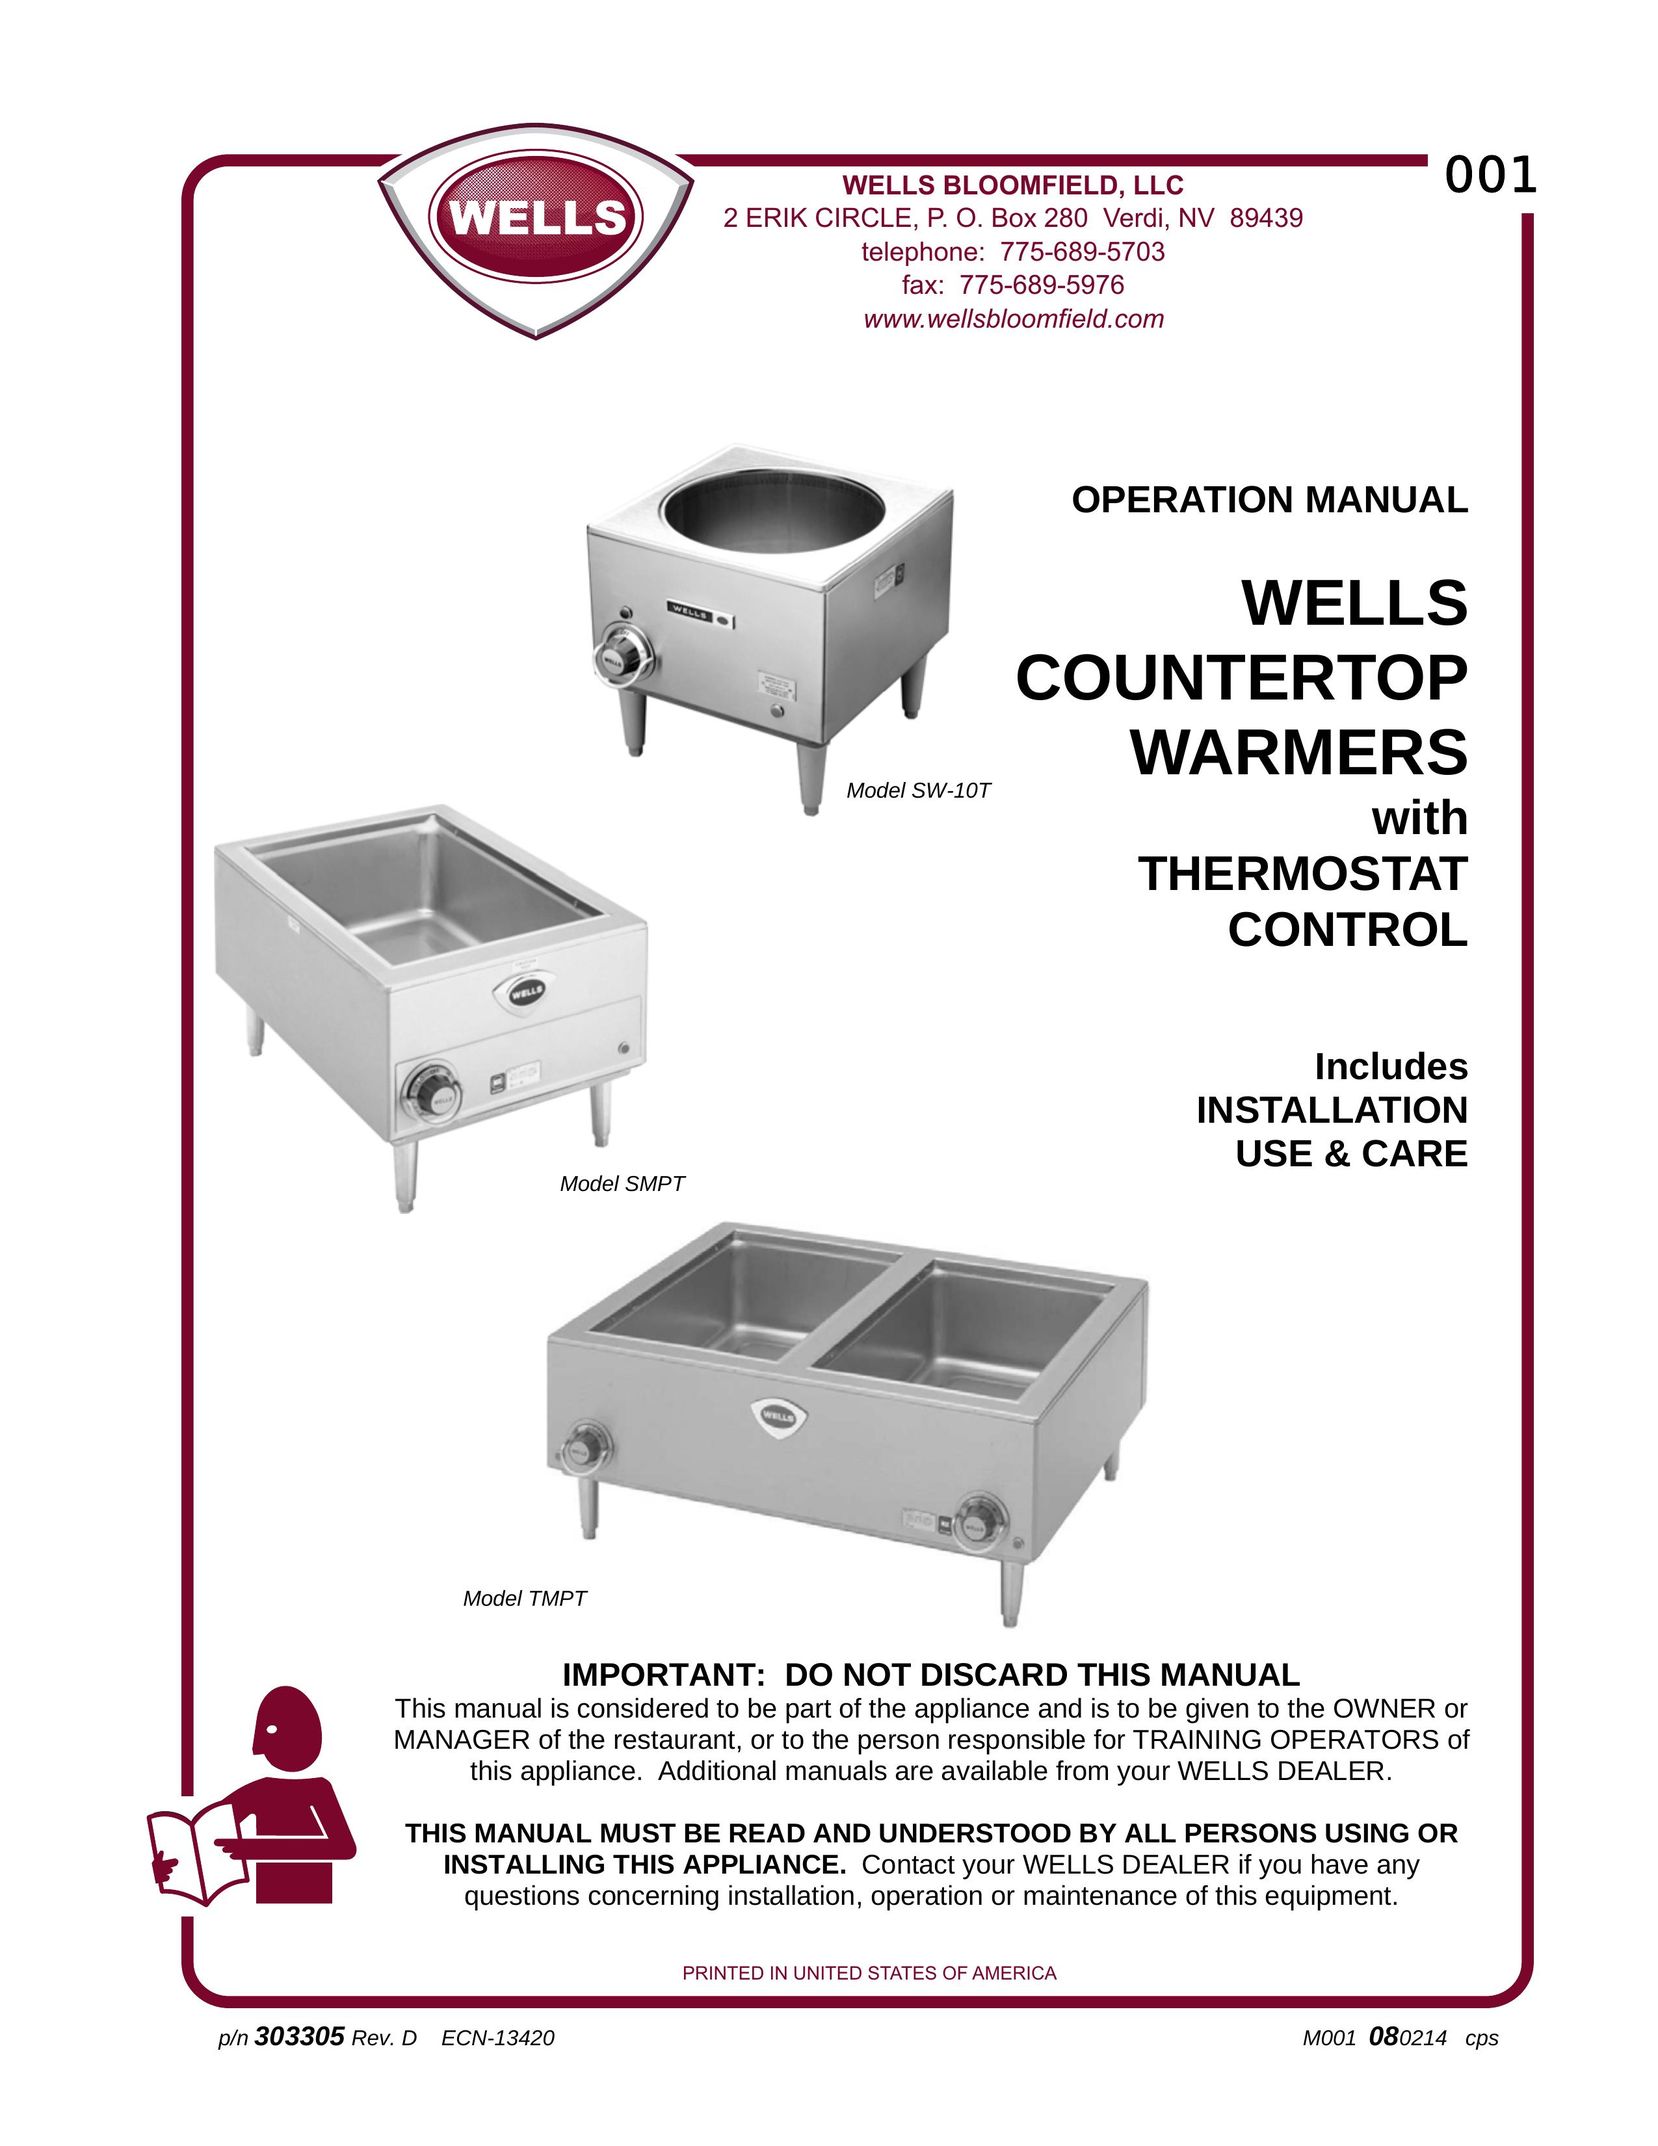 Wells SMPT Food Warmer User Manual